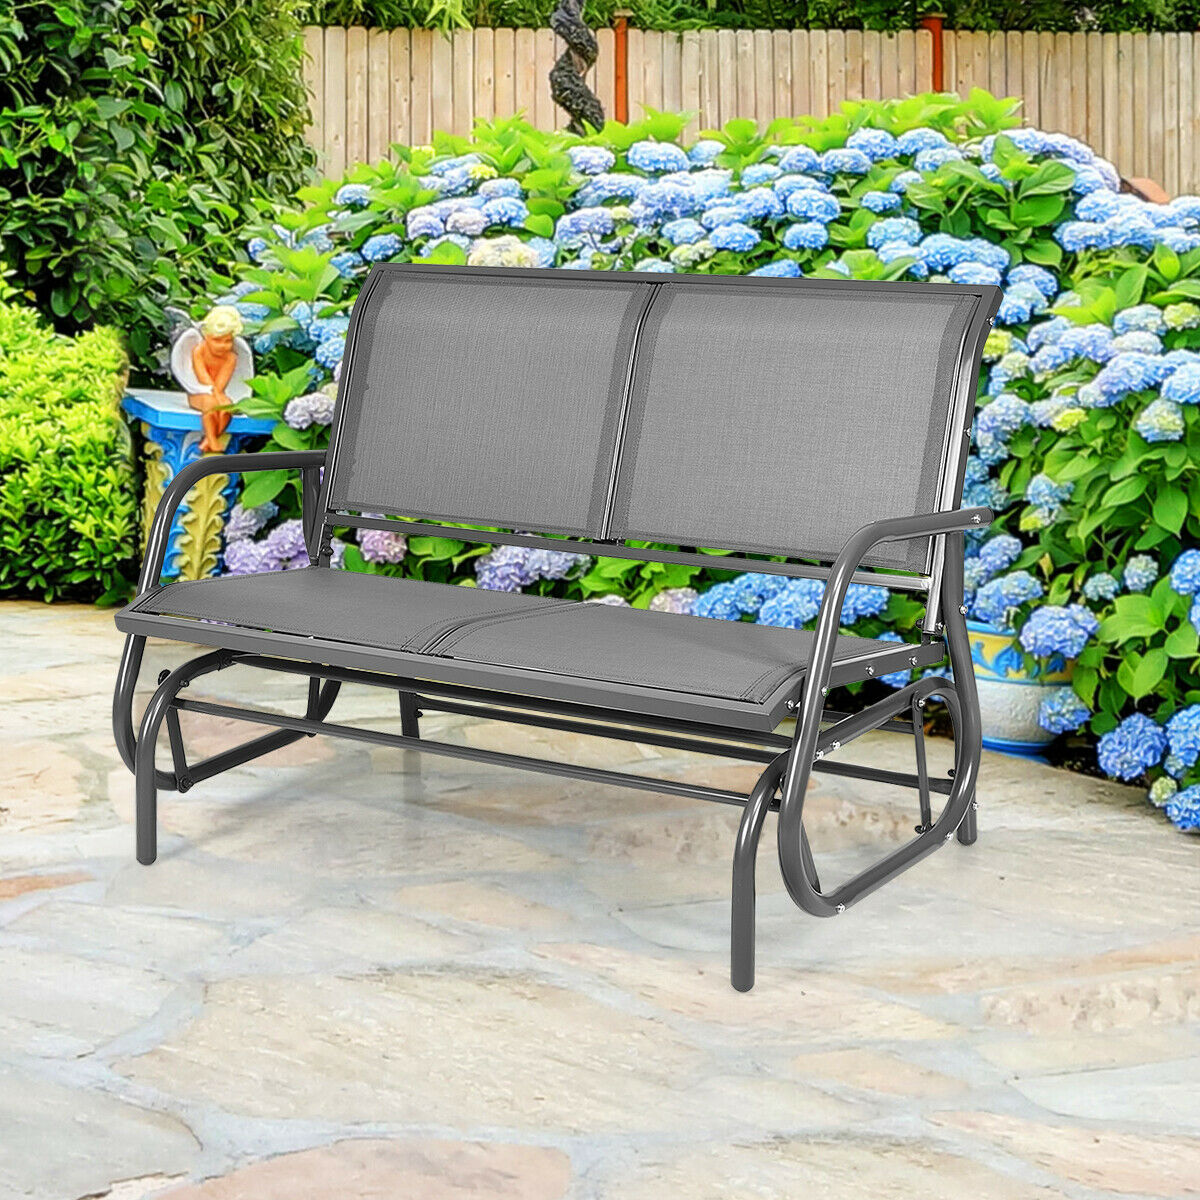 Gymax 48'' Outdoor Patio Swing Glider Bench Chair Loveseat Rocker Lounge Backyard Grey - image 4 of 10